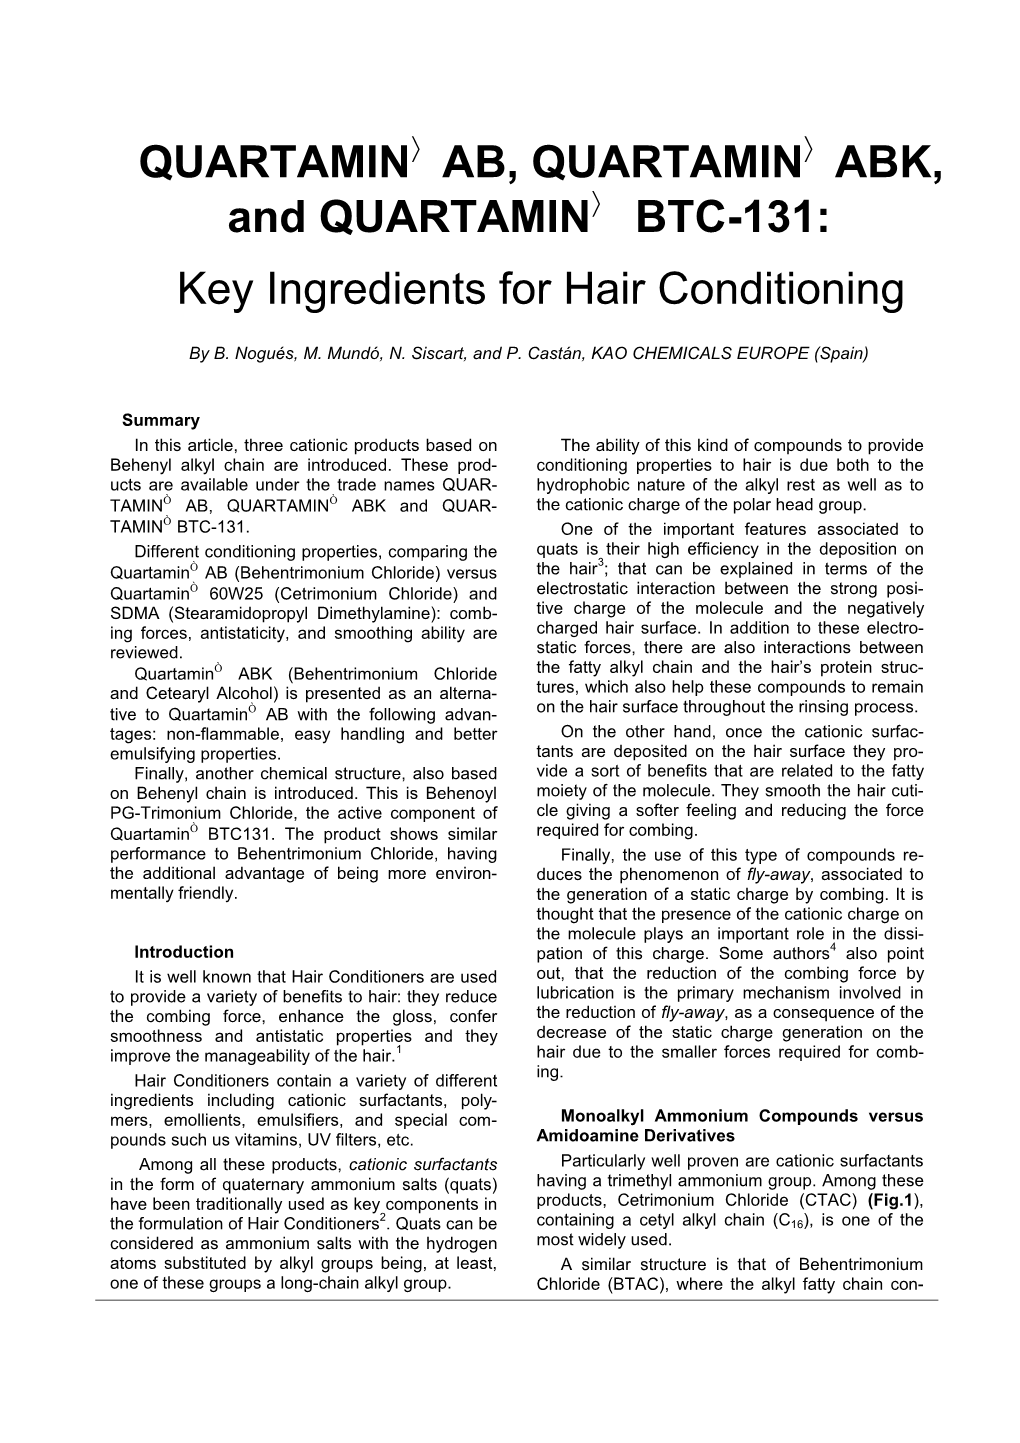 QUARTAMIN AB, QUARTAMIN ABK, and QUARTAMIN BTC-131: Key Ingredients for Hair Conditioning